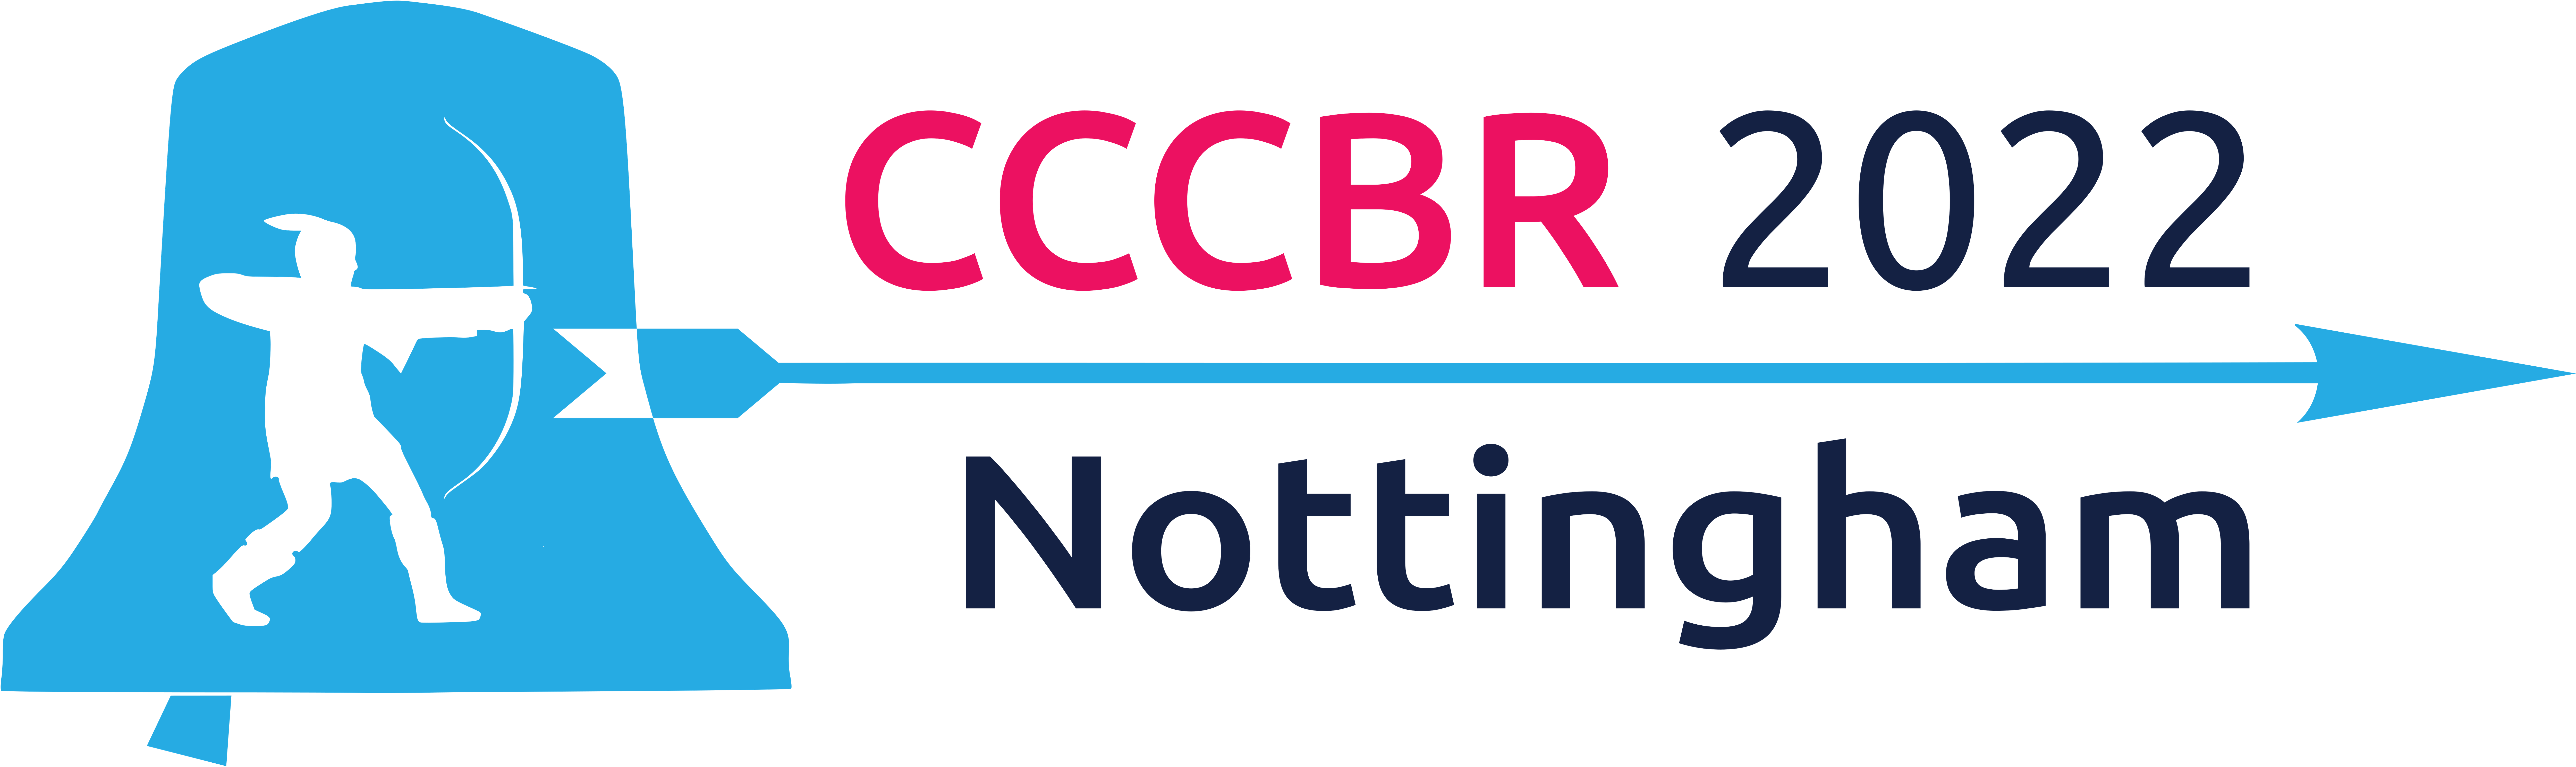 CCCBR_2022_Nottingham_Logo_Blue_hires